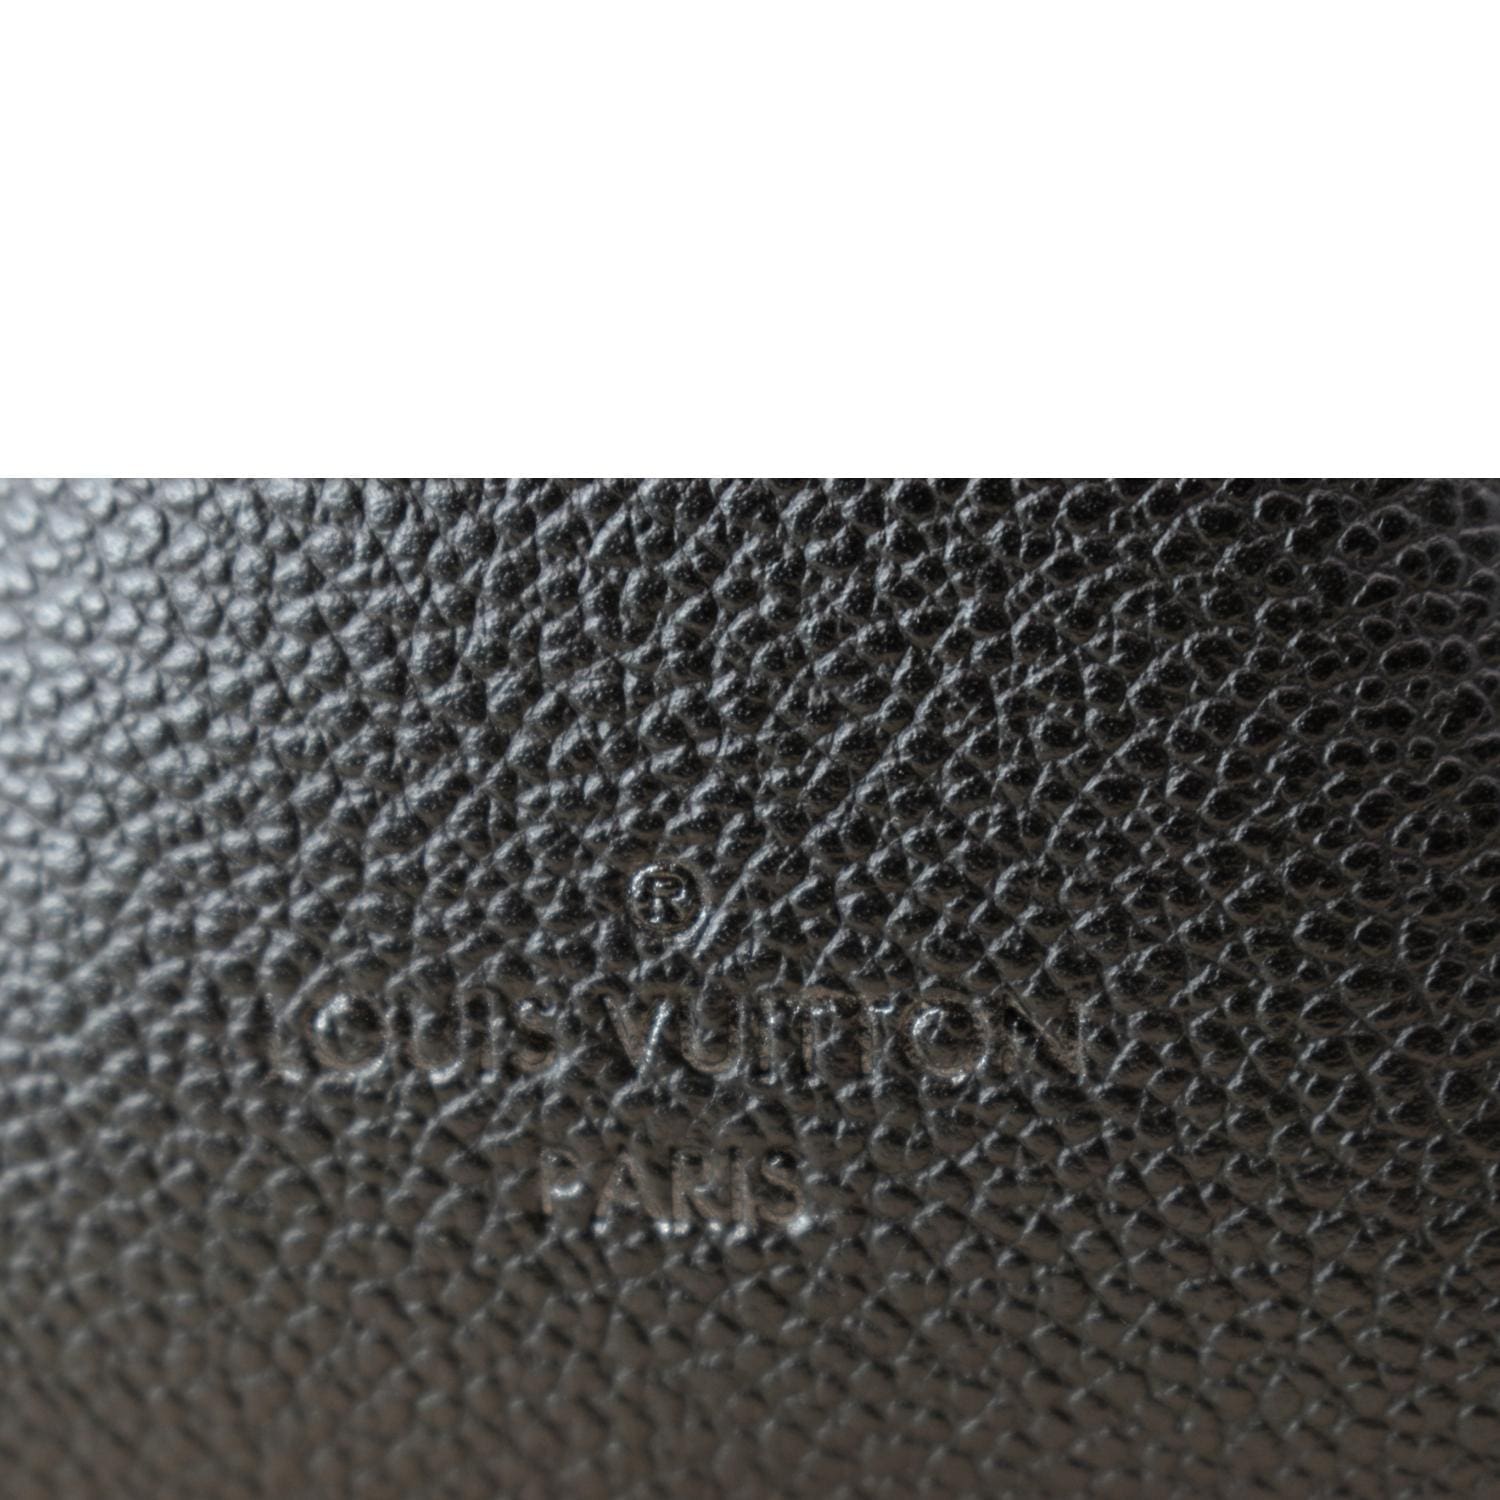 Mint Cond! Louis Vuitton Soufflot BB Crossbody Mono with Black